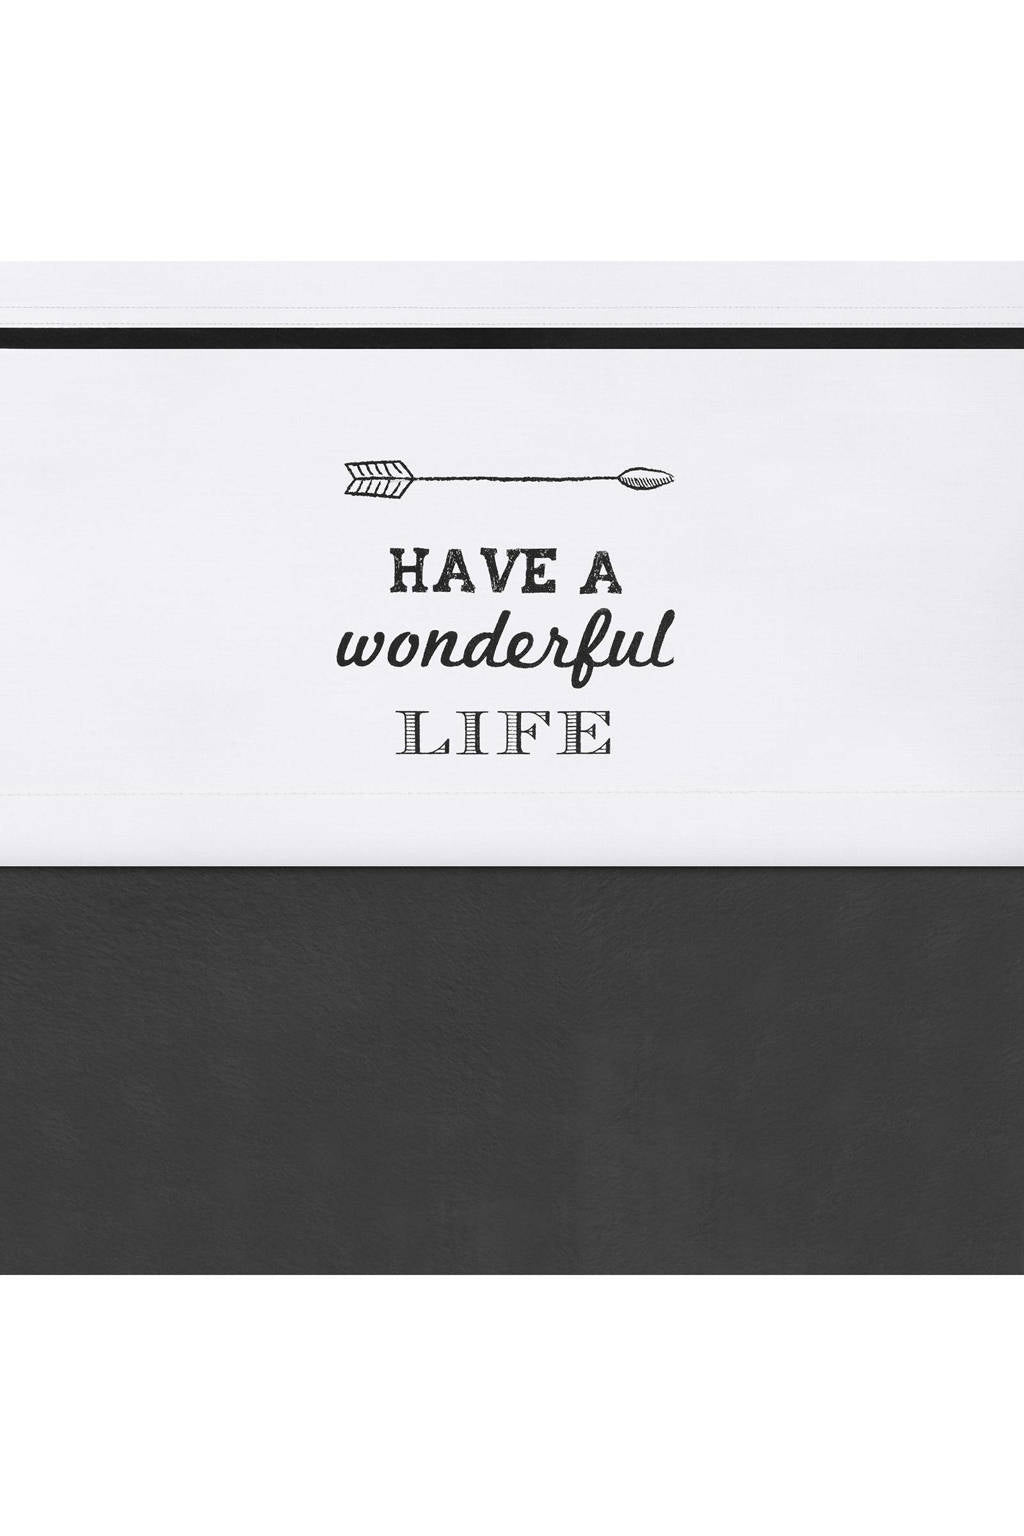 Laken 120x150cm Have a Wonderfull life 💸